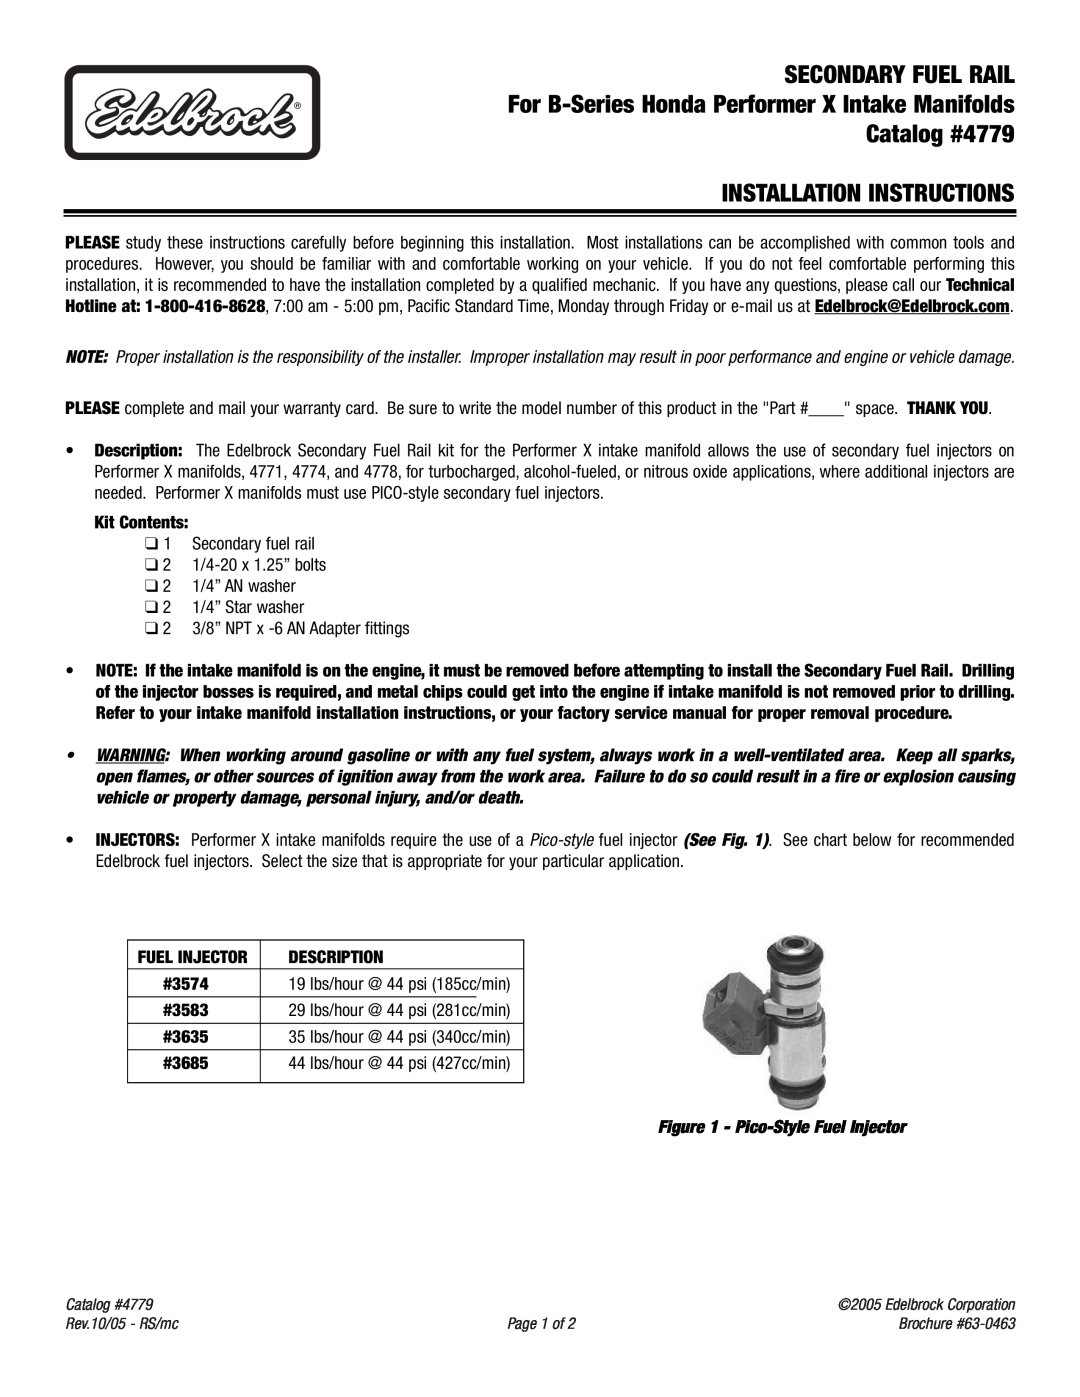 Edelbrock brochure Kit Contents, Description, #3574, #3583, #3635, #3685, Pico-Style Fuel Injector, Catalog #4779 